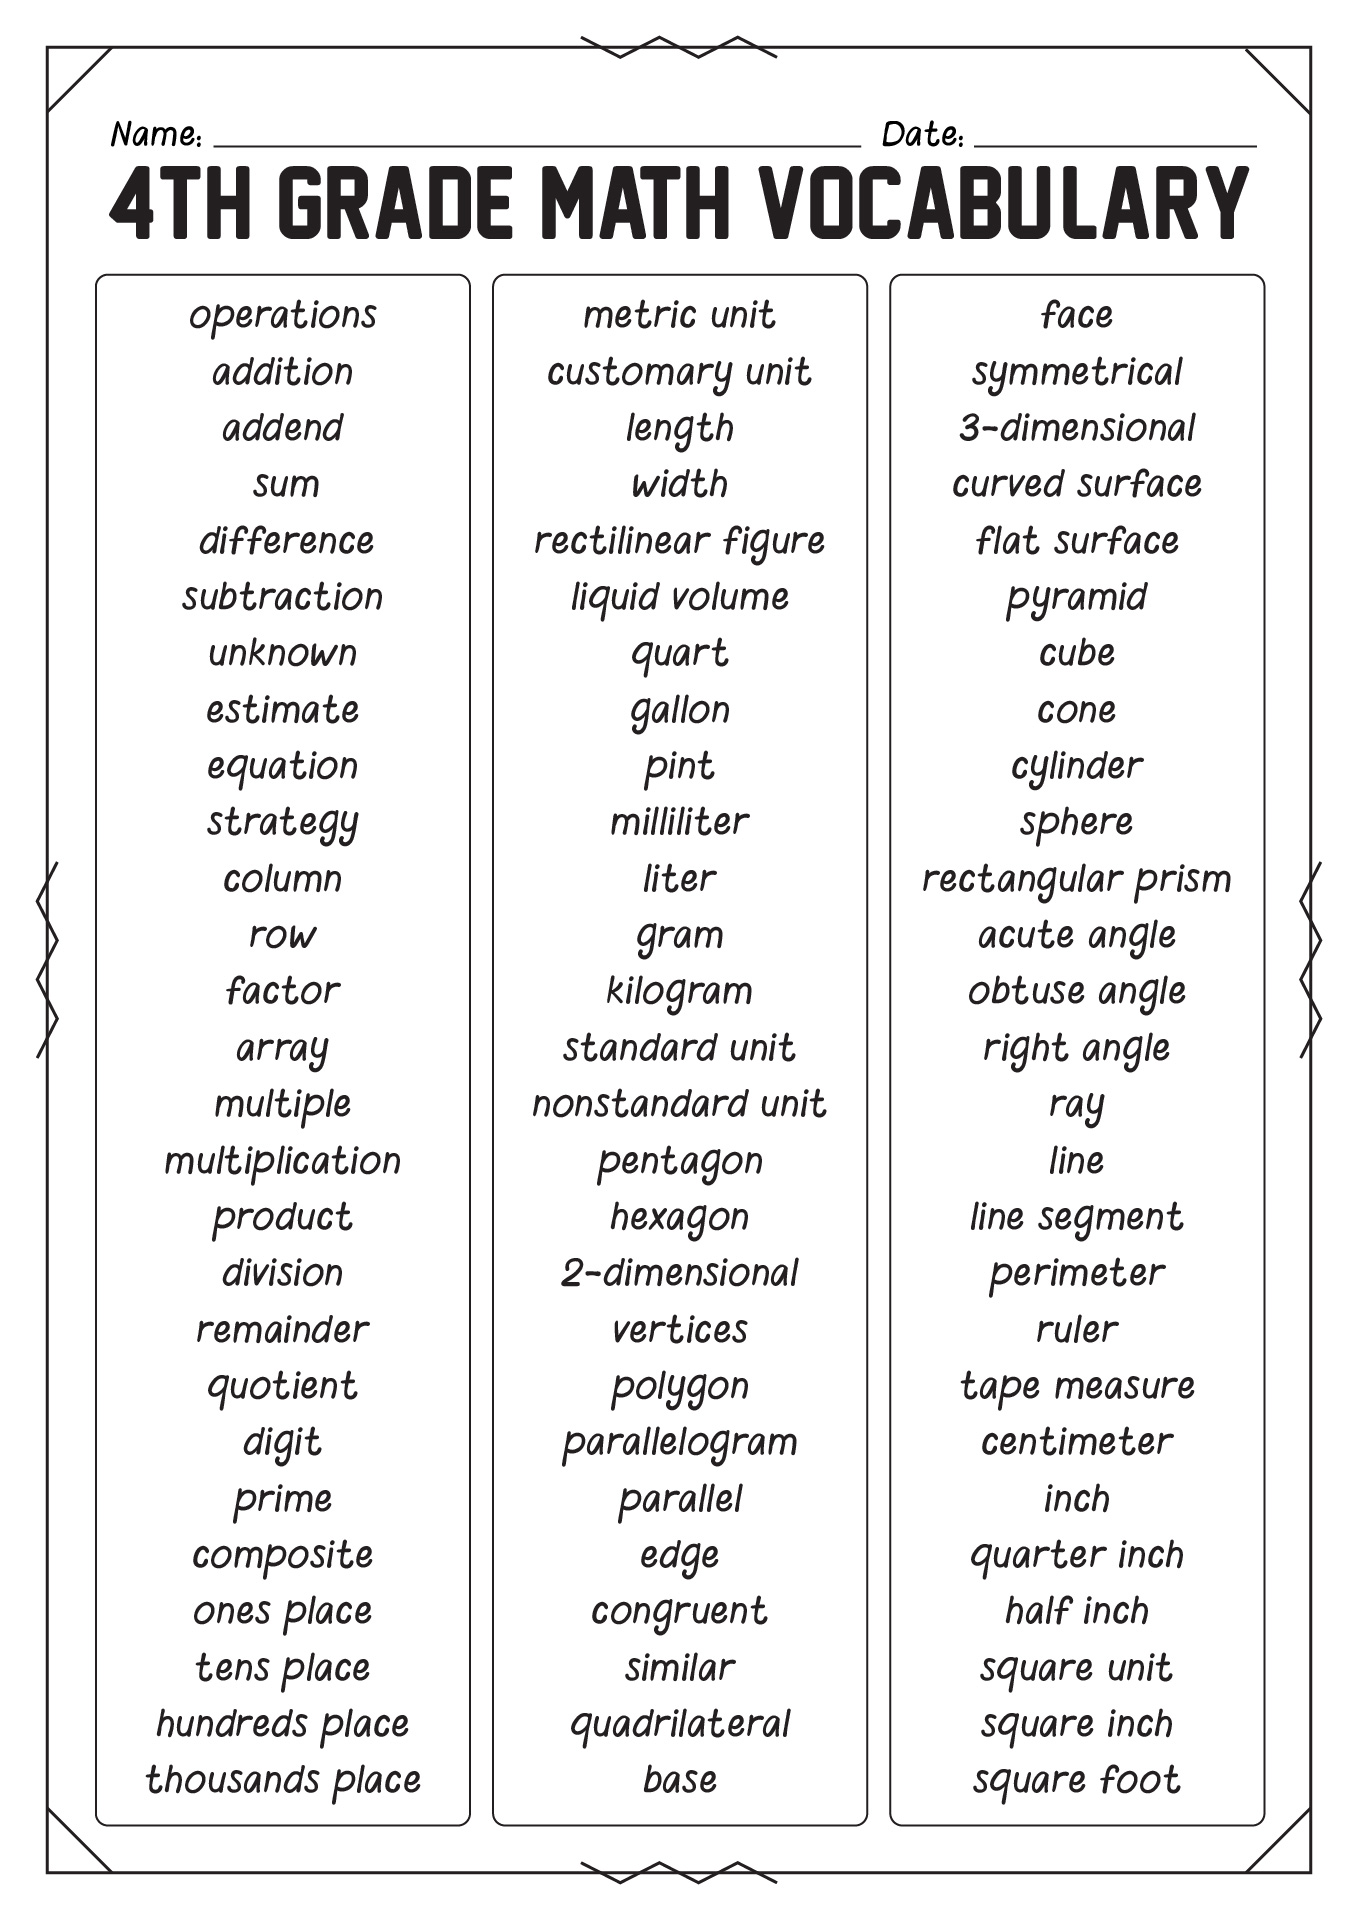 4th Grade Math Vocabulary List